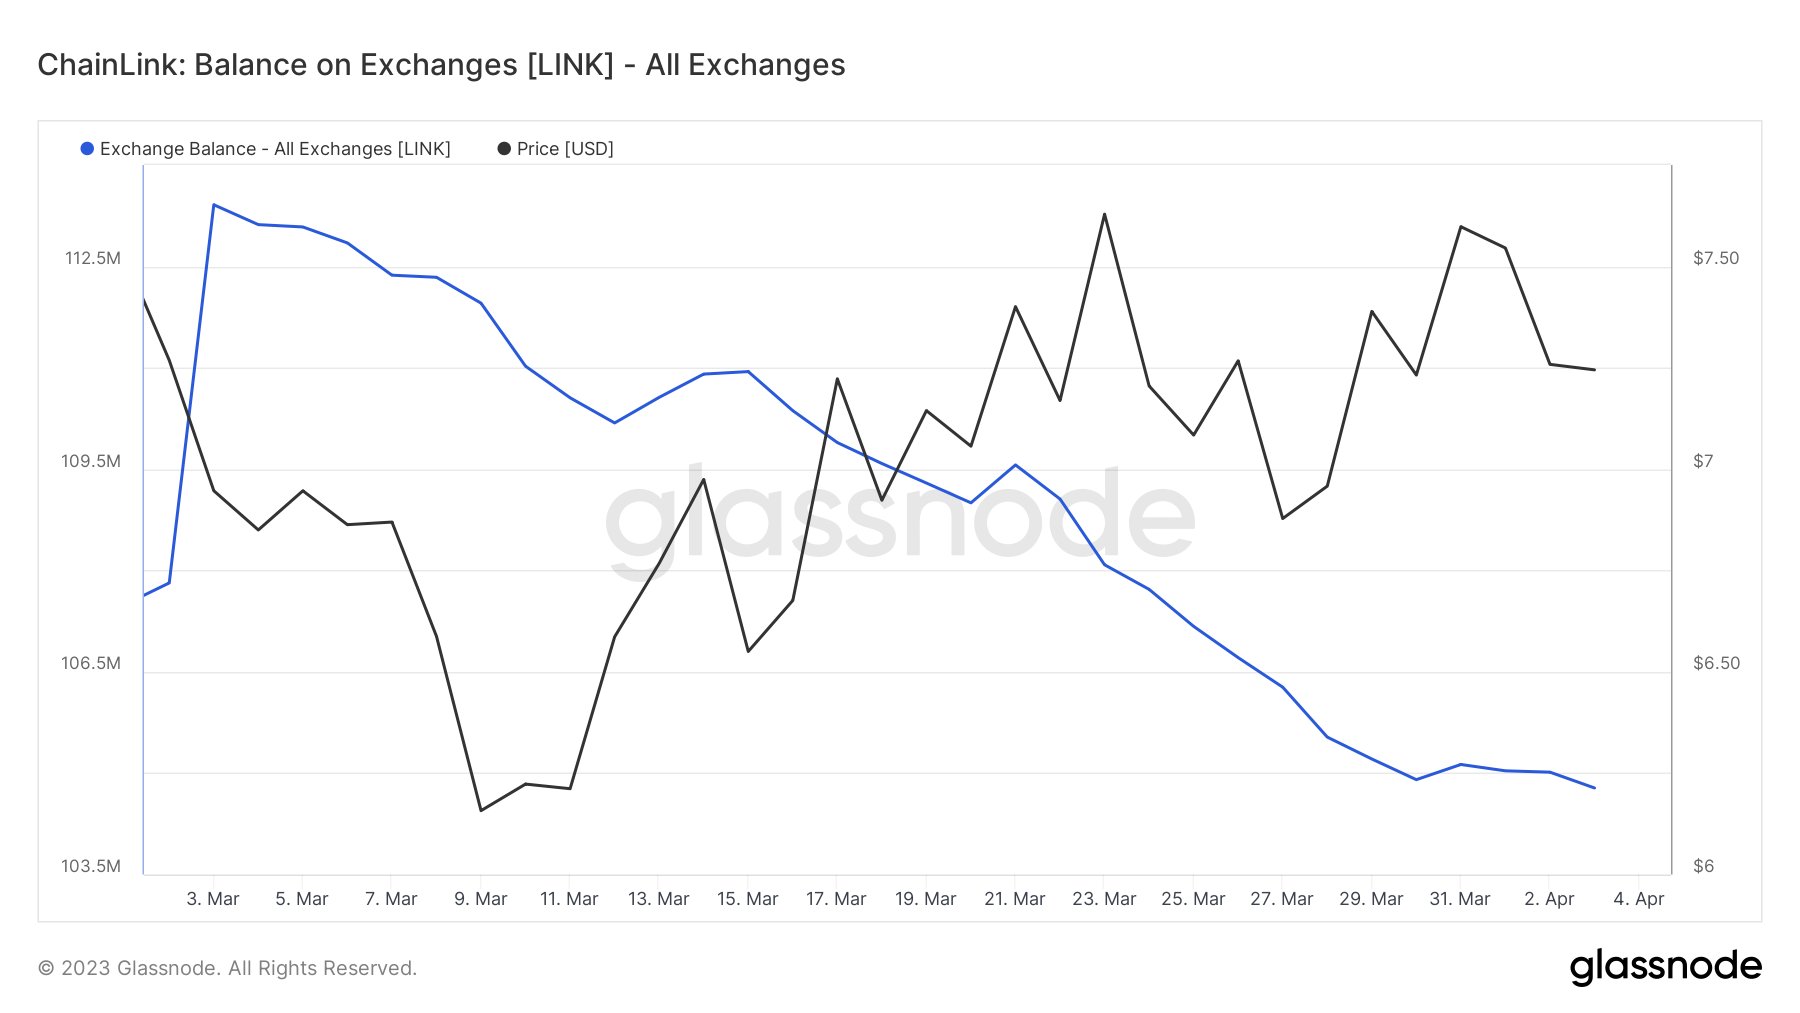 LINK balance on exchanges